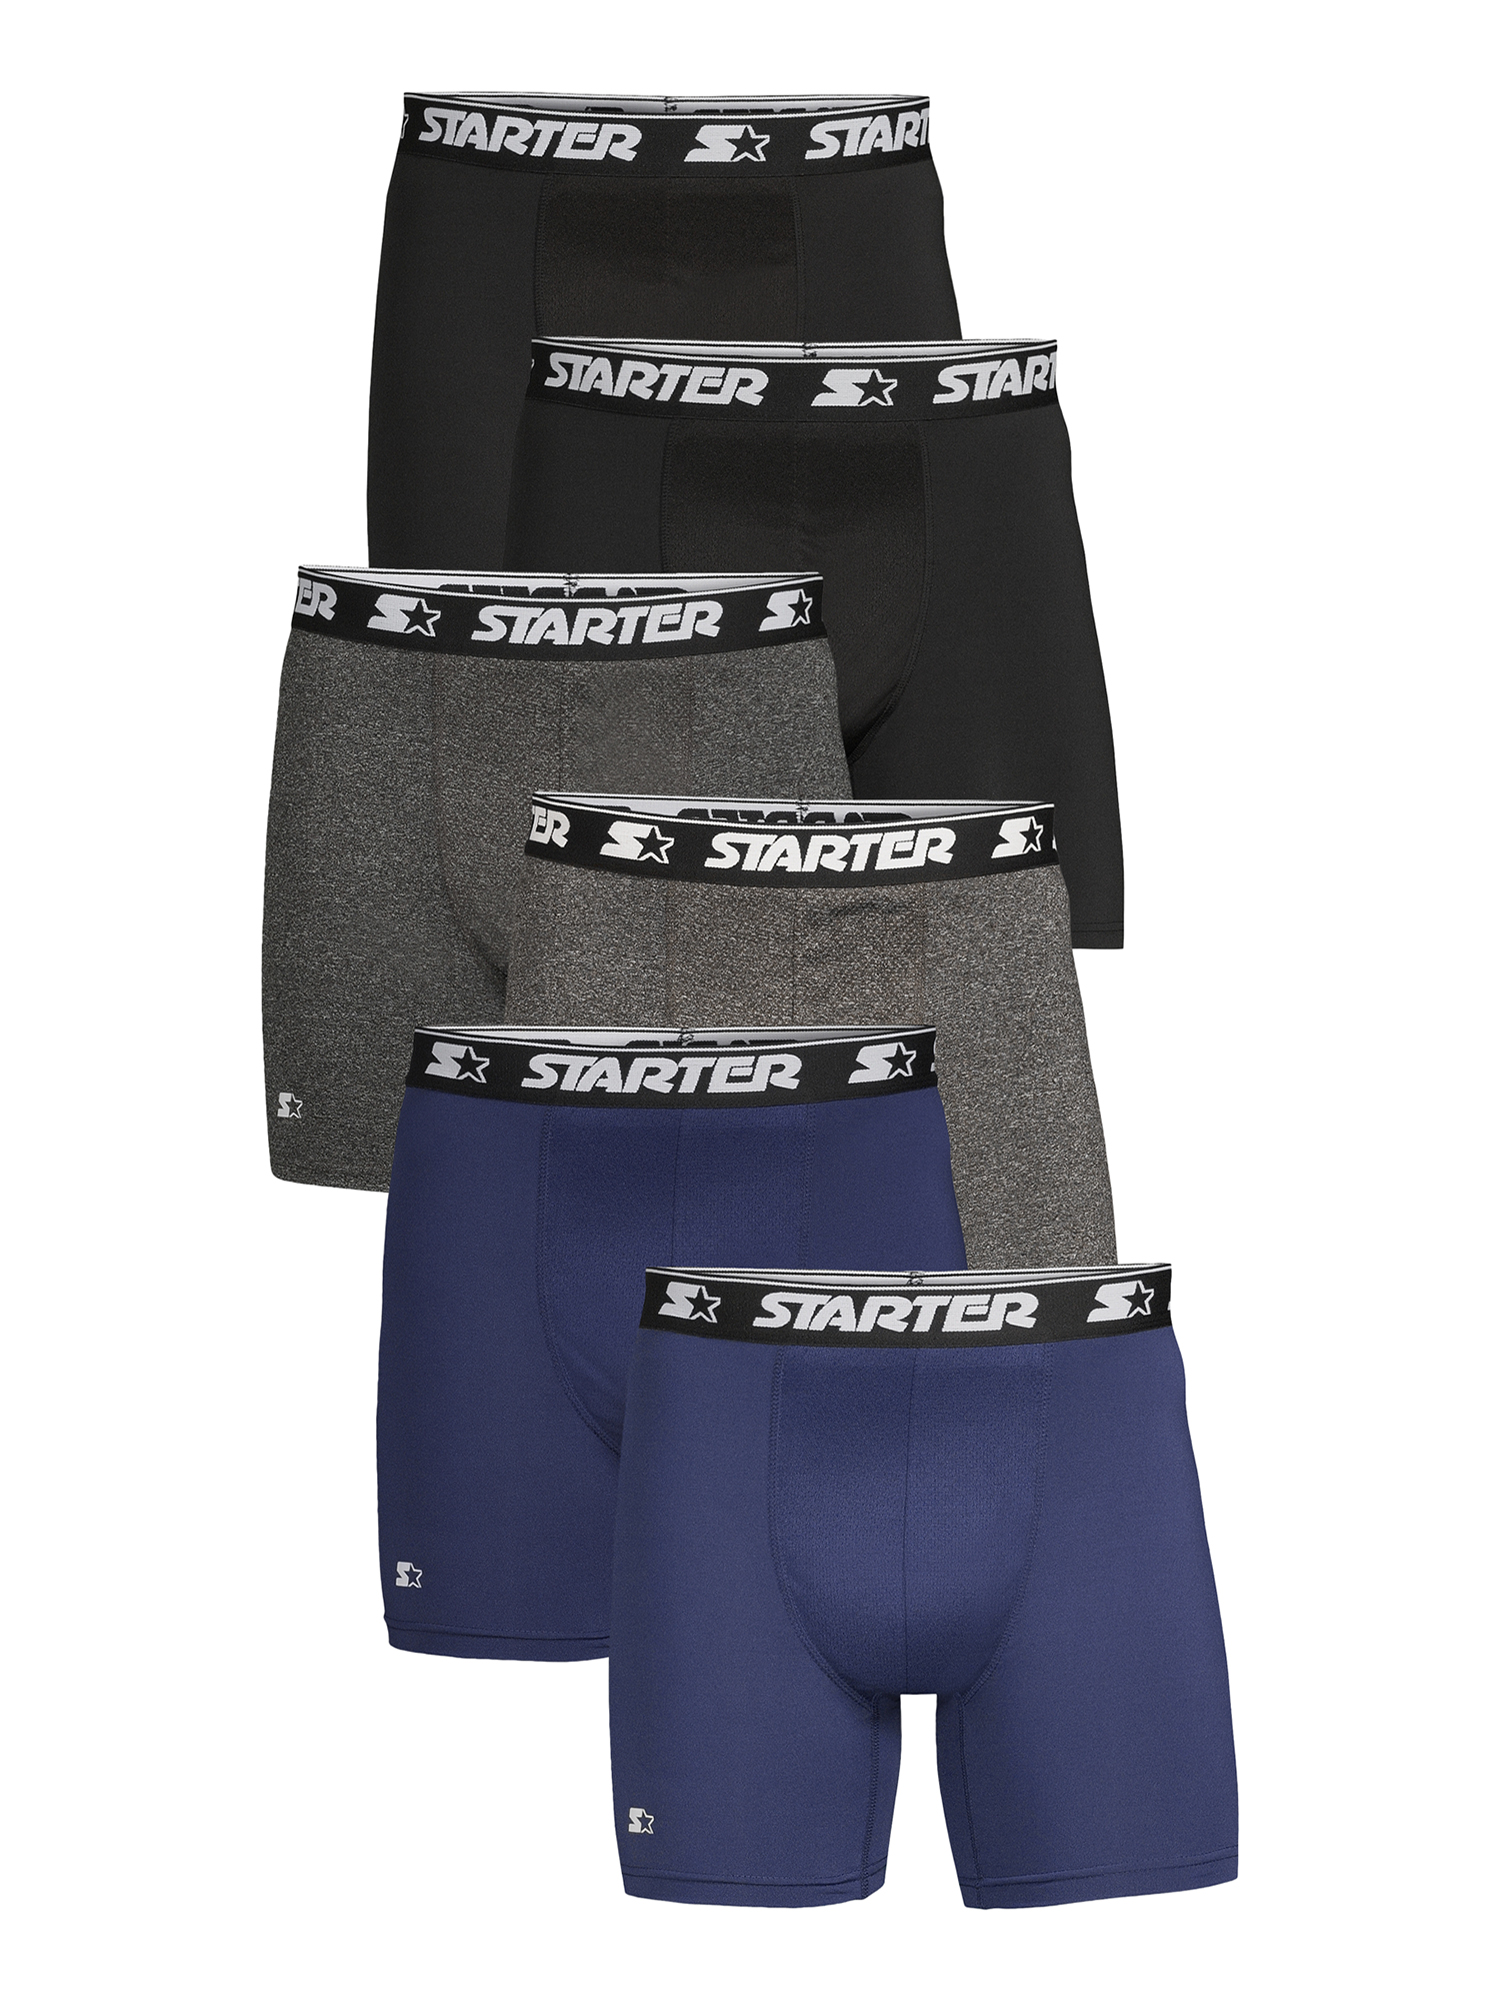 Starter Men's Performance Athletic Stretch Boxer Briefs, 6-Pack ...